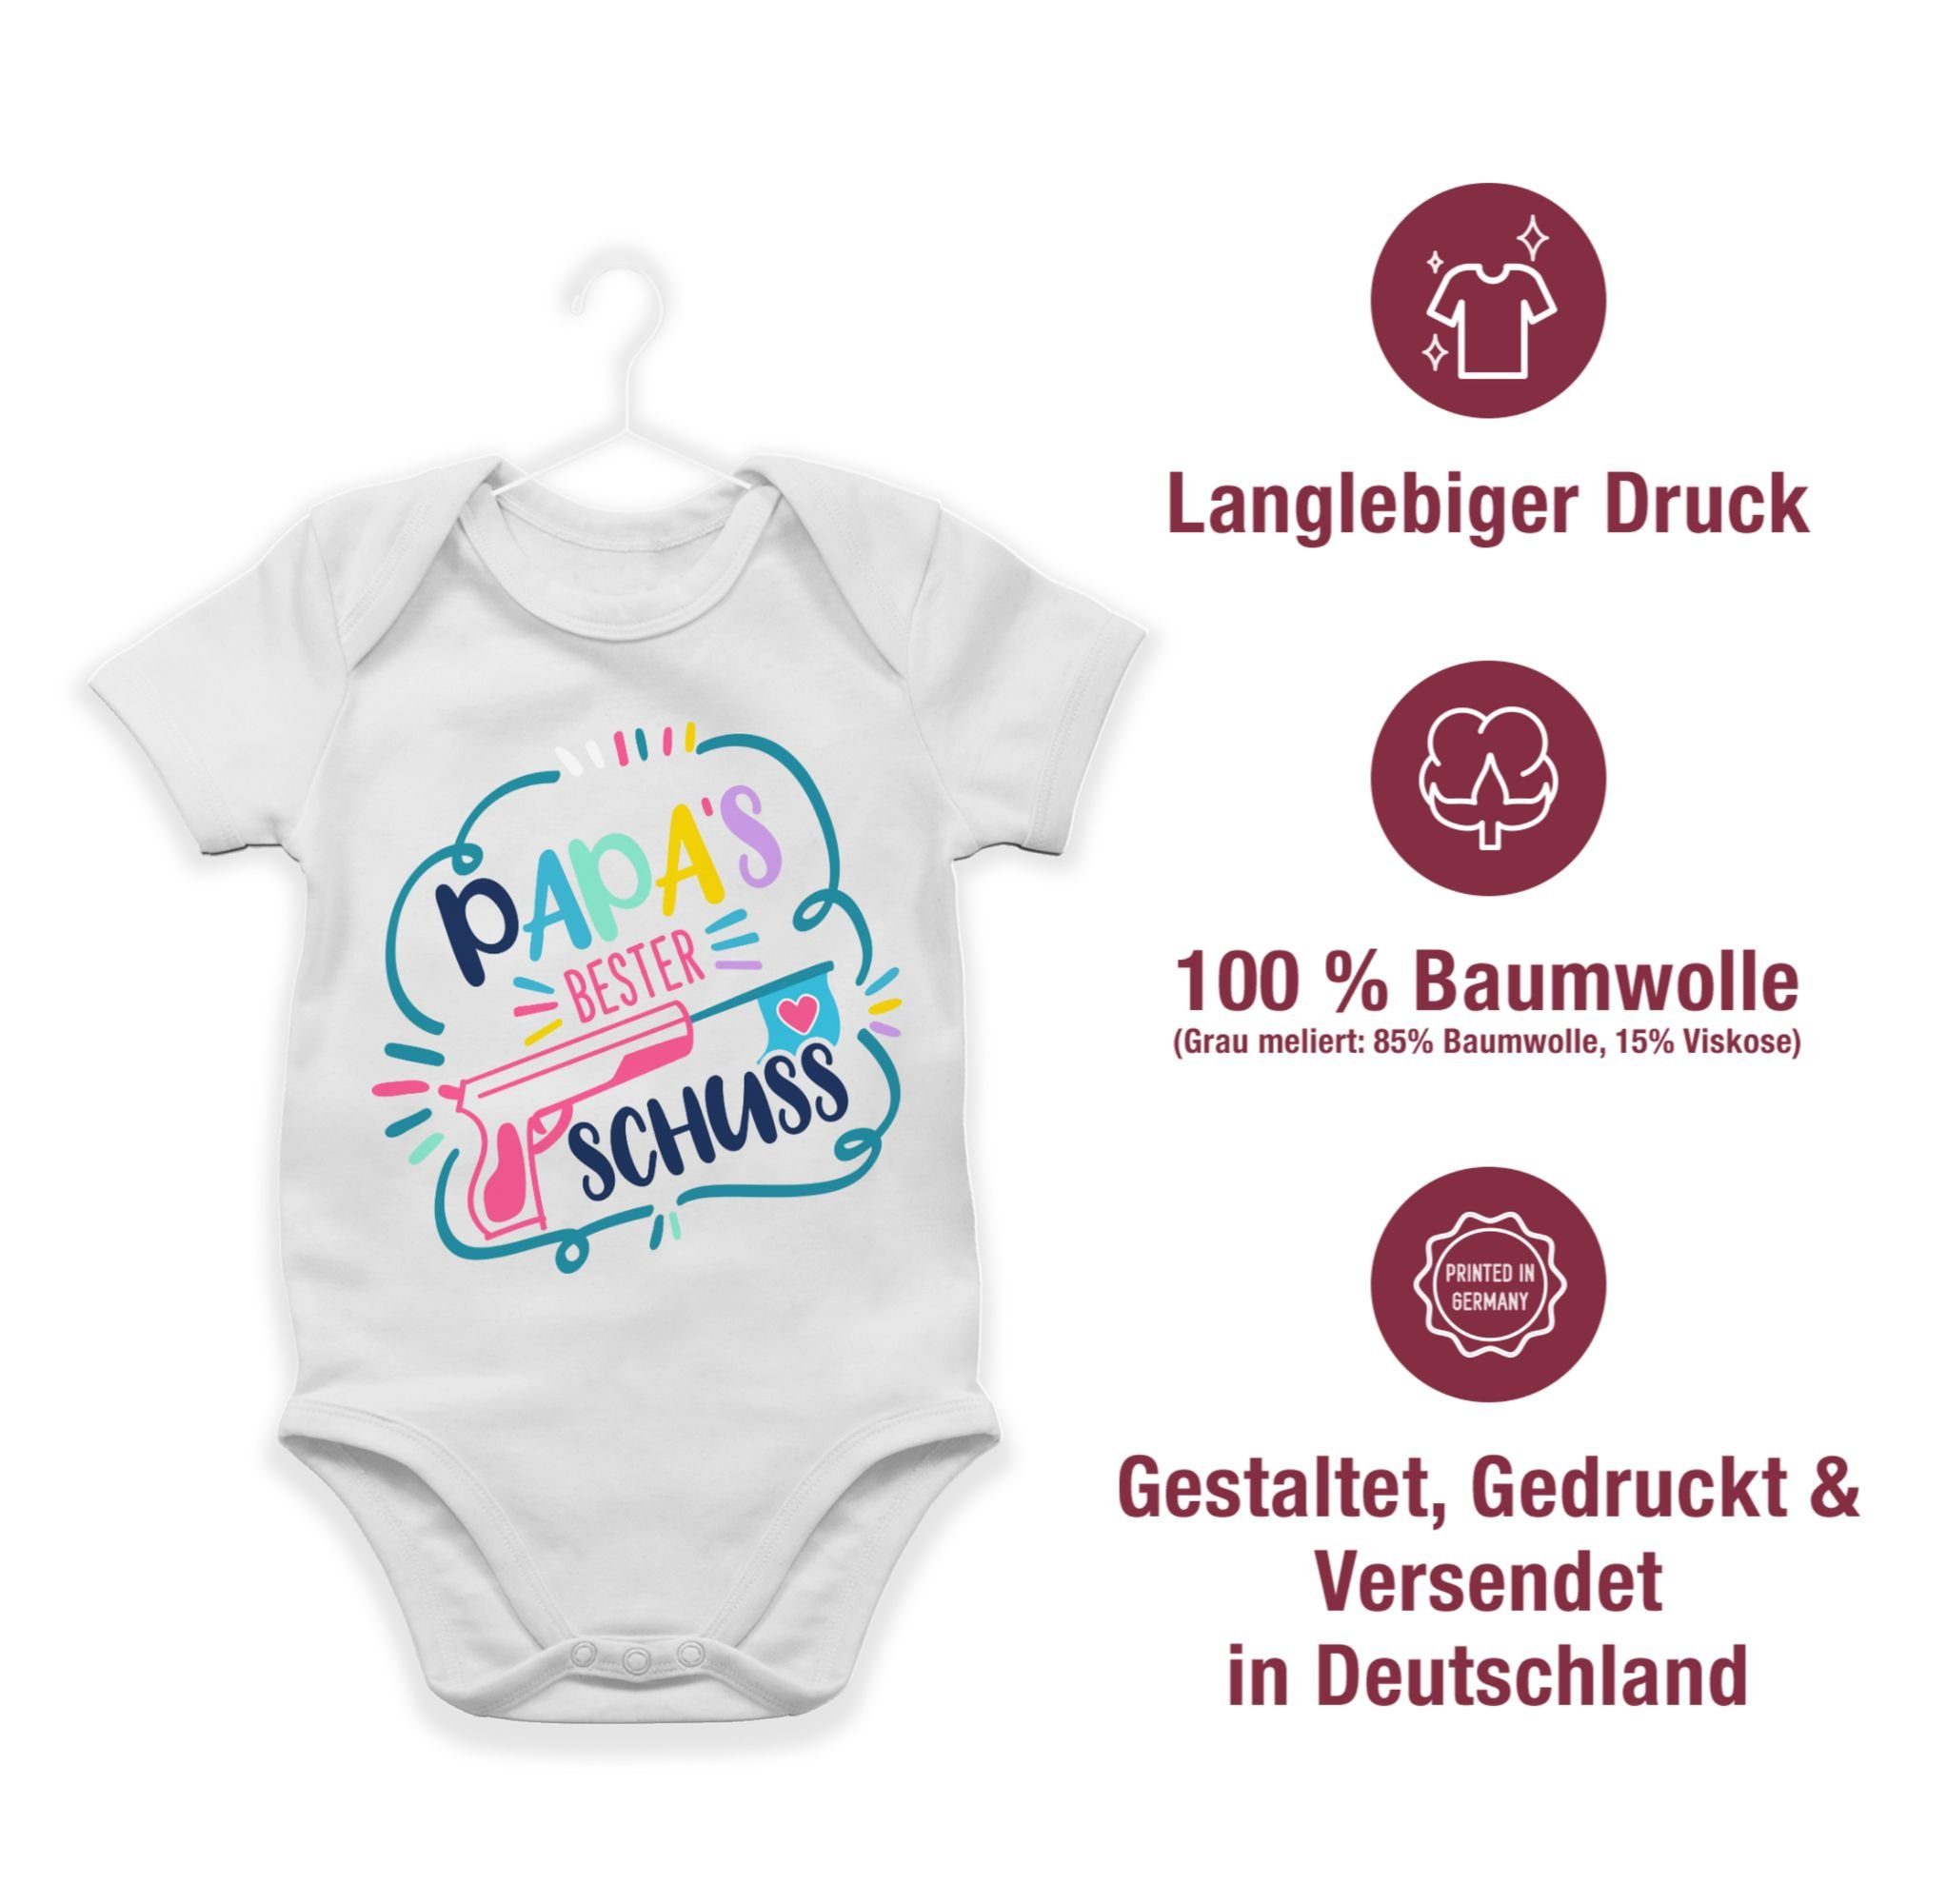 Treffer bunt Shirtracer Papas bester Weiß Shirtbody 2 Comic Vatertag Baby Geschenk